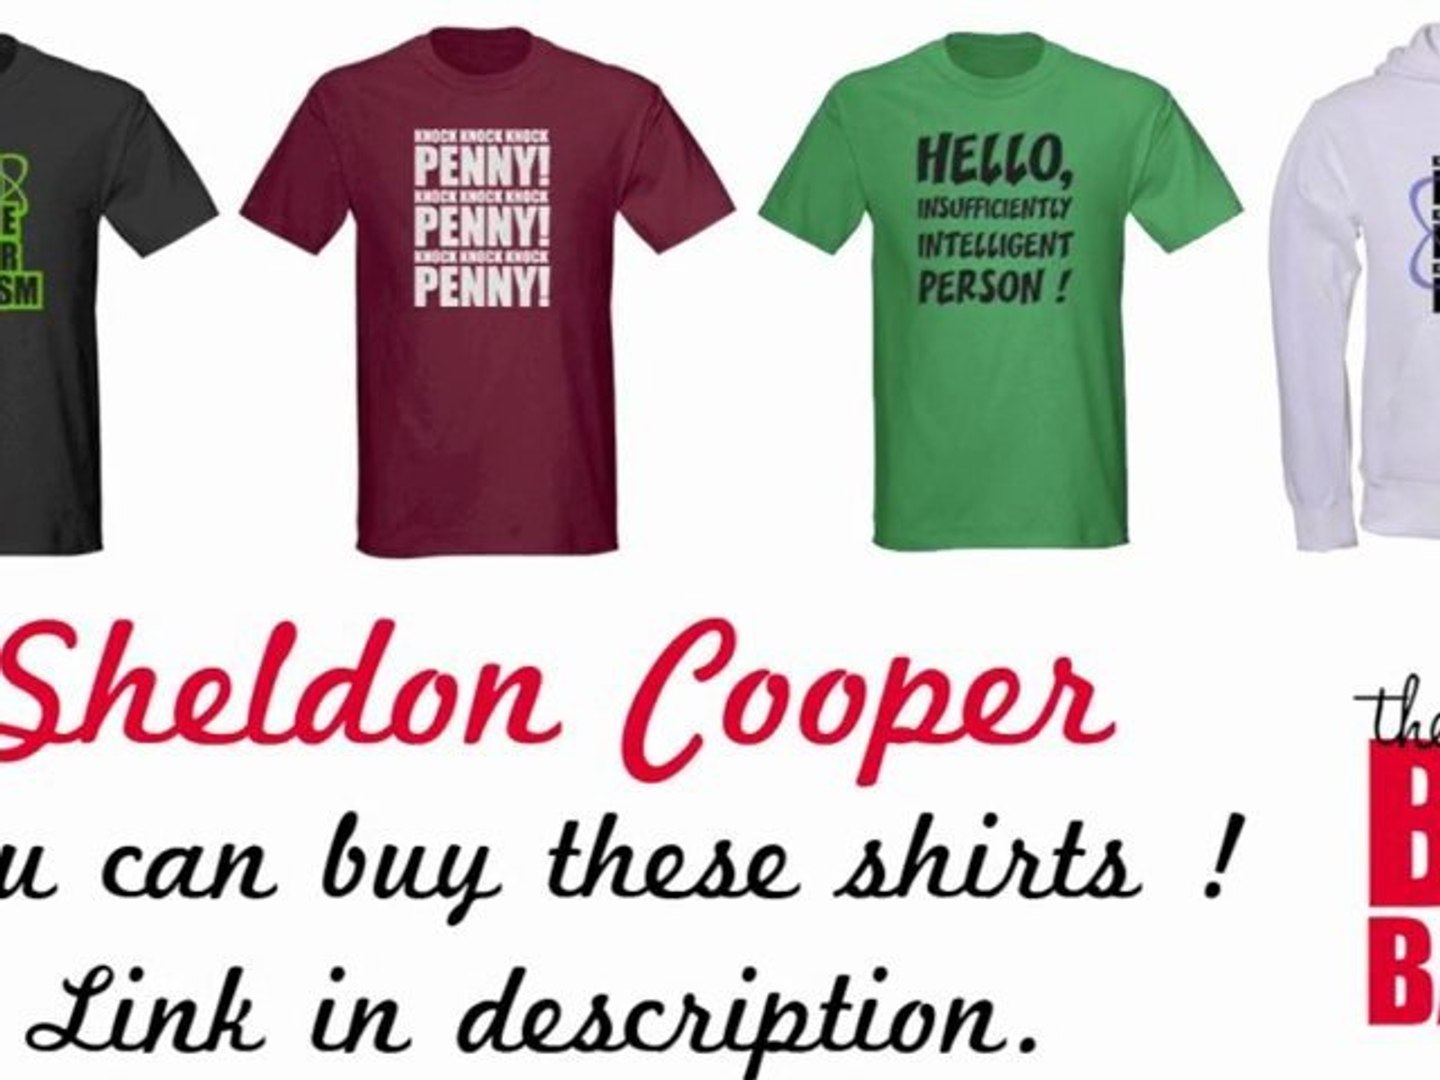 The Big Bang Theory - Sheldon Cooper Shirts